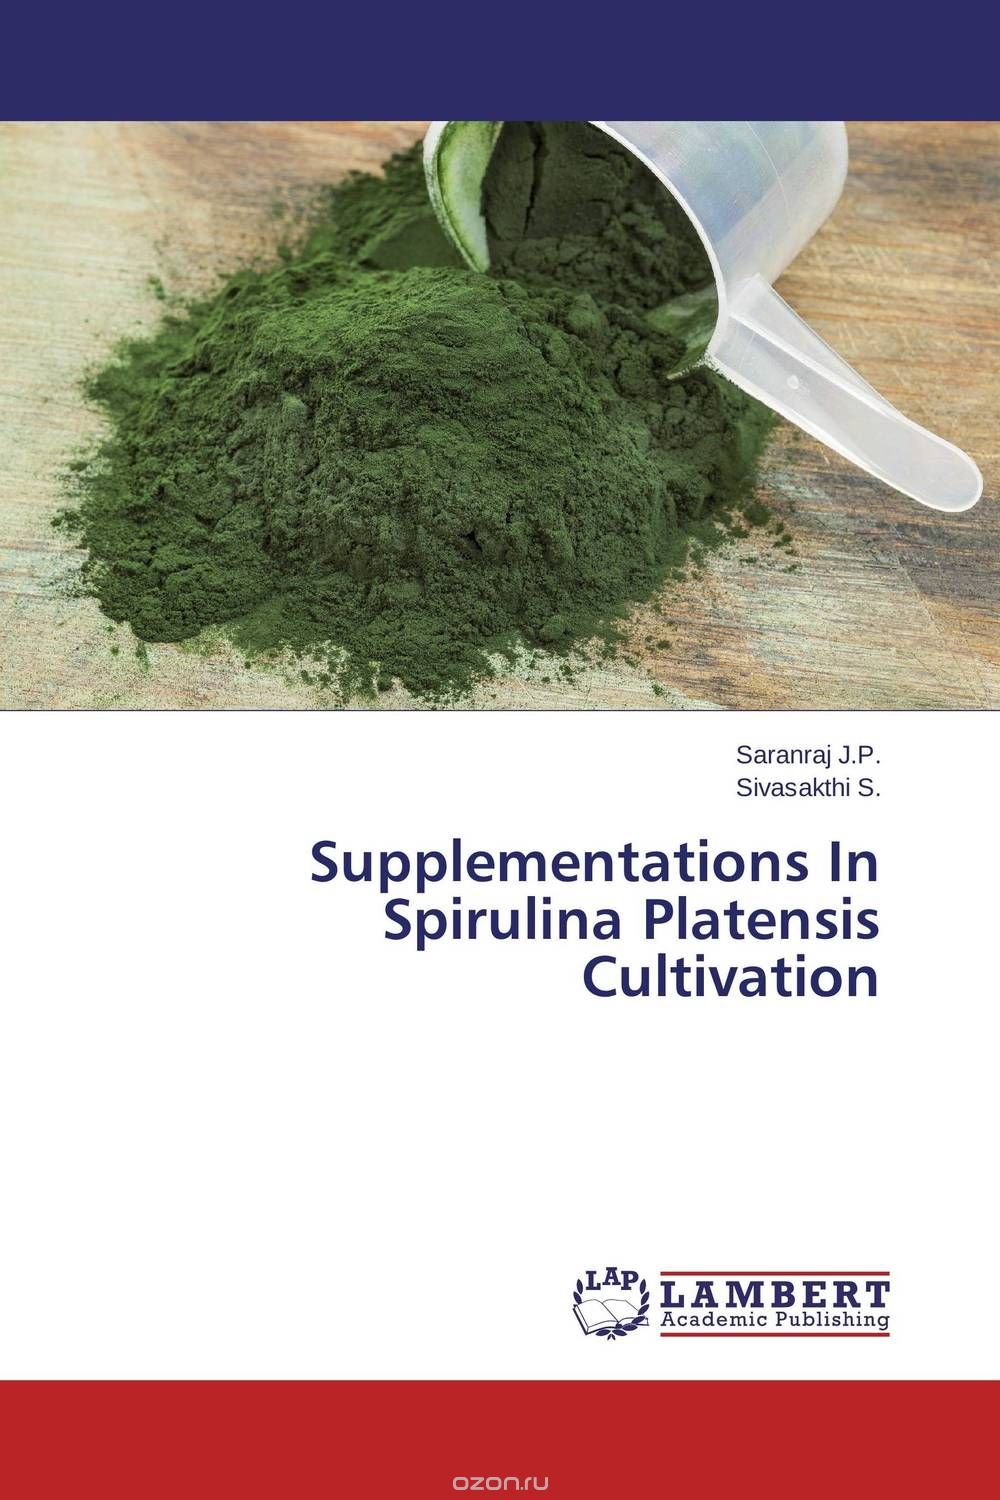 Скачать книгу "Supplementations In Spirulina Platensis Cultivation"